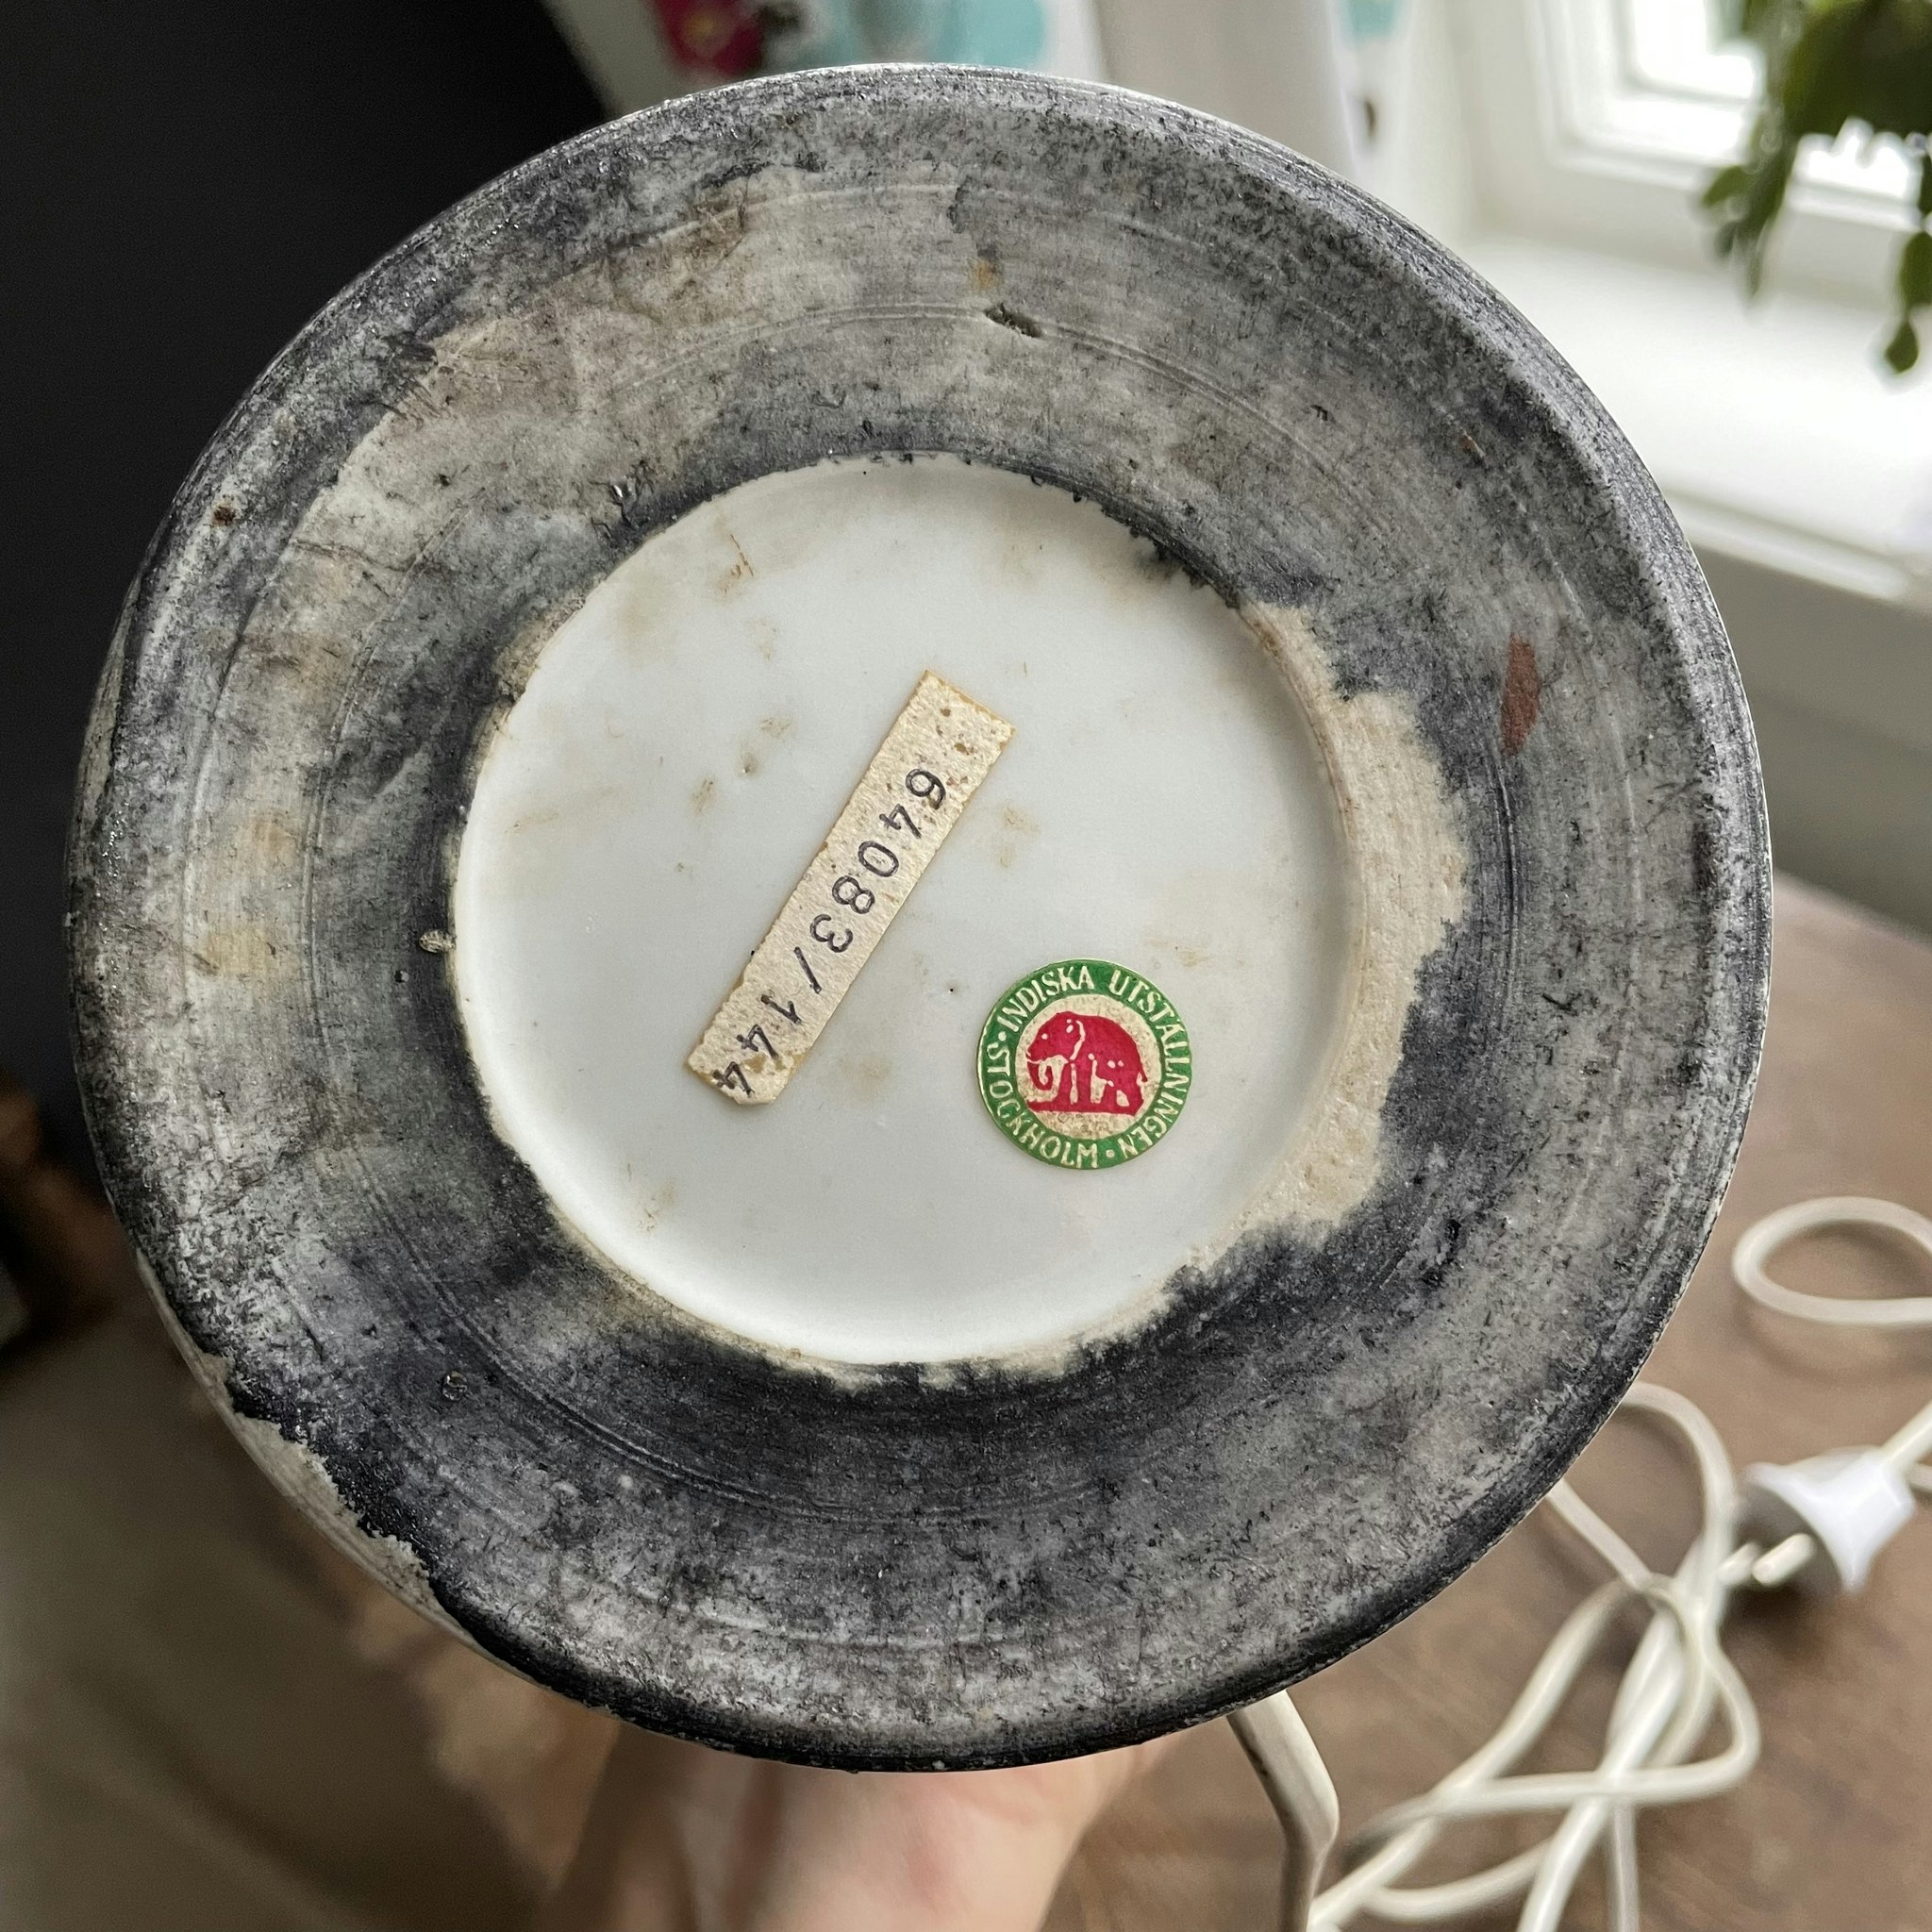 Antique Chinese Porcelain Brush Pot / Hat stand / Lamp Republic #707